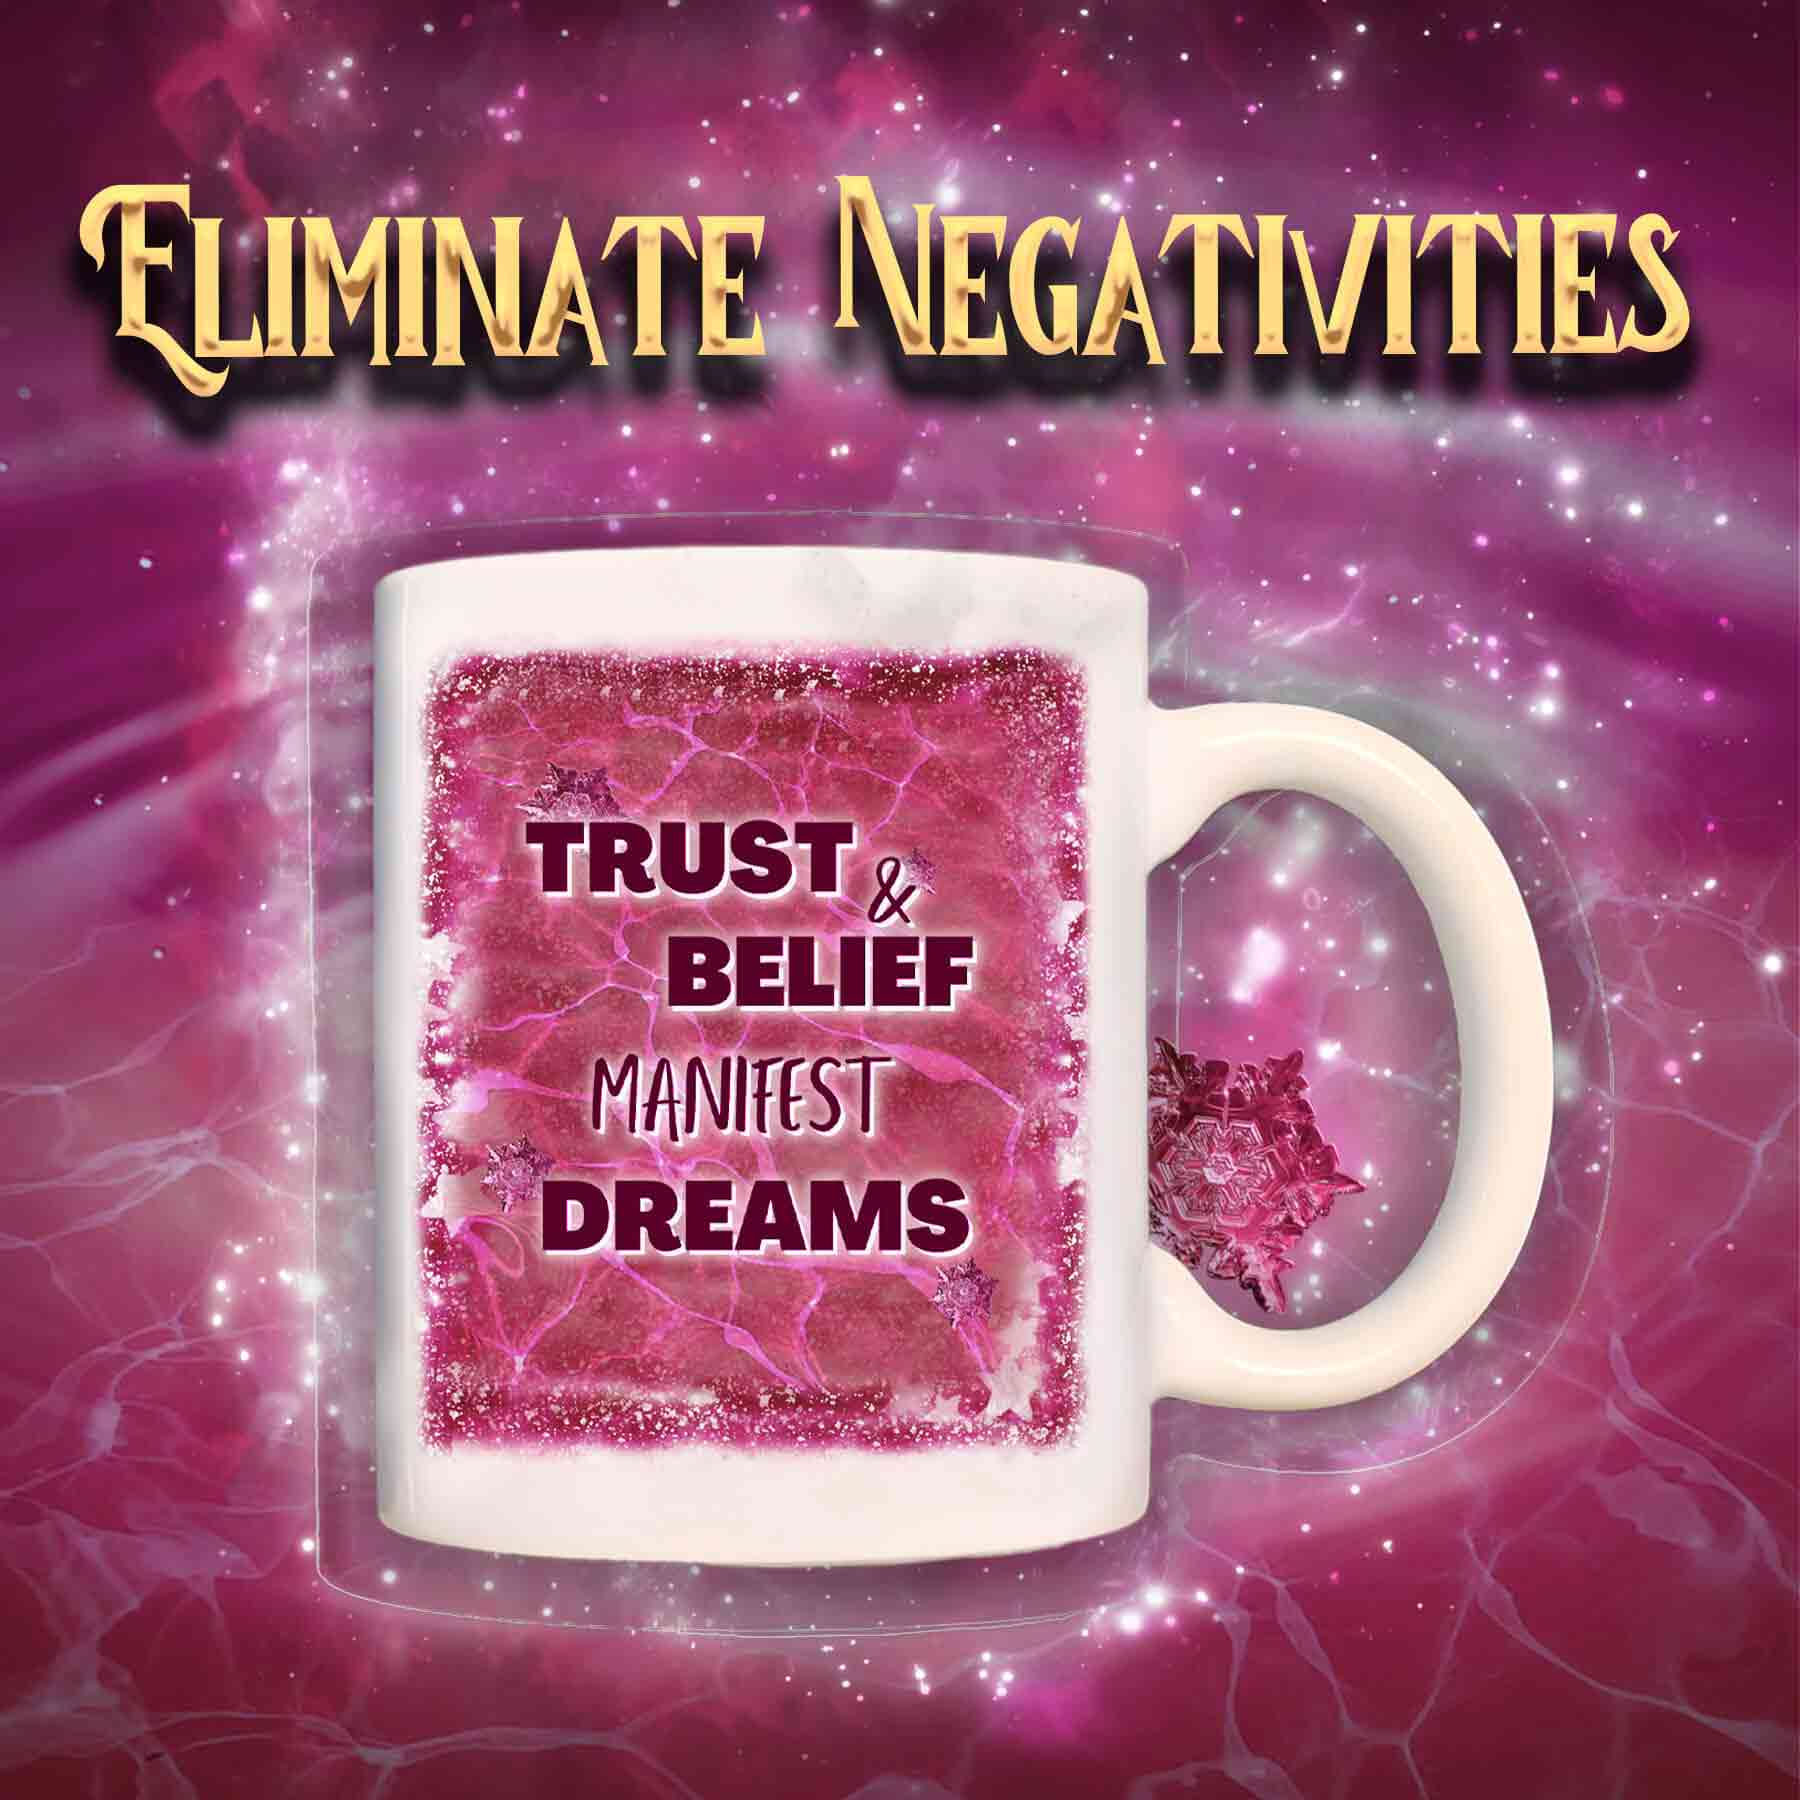 Trust-_-belief mug